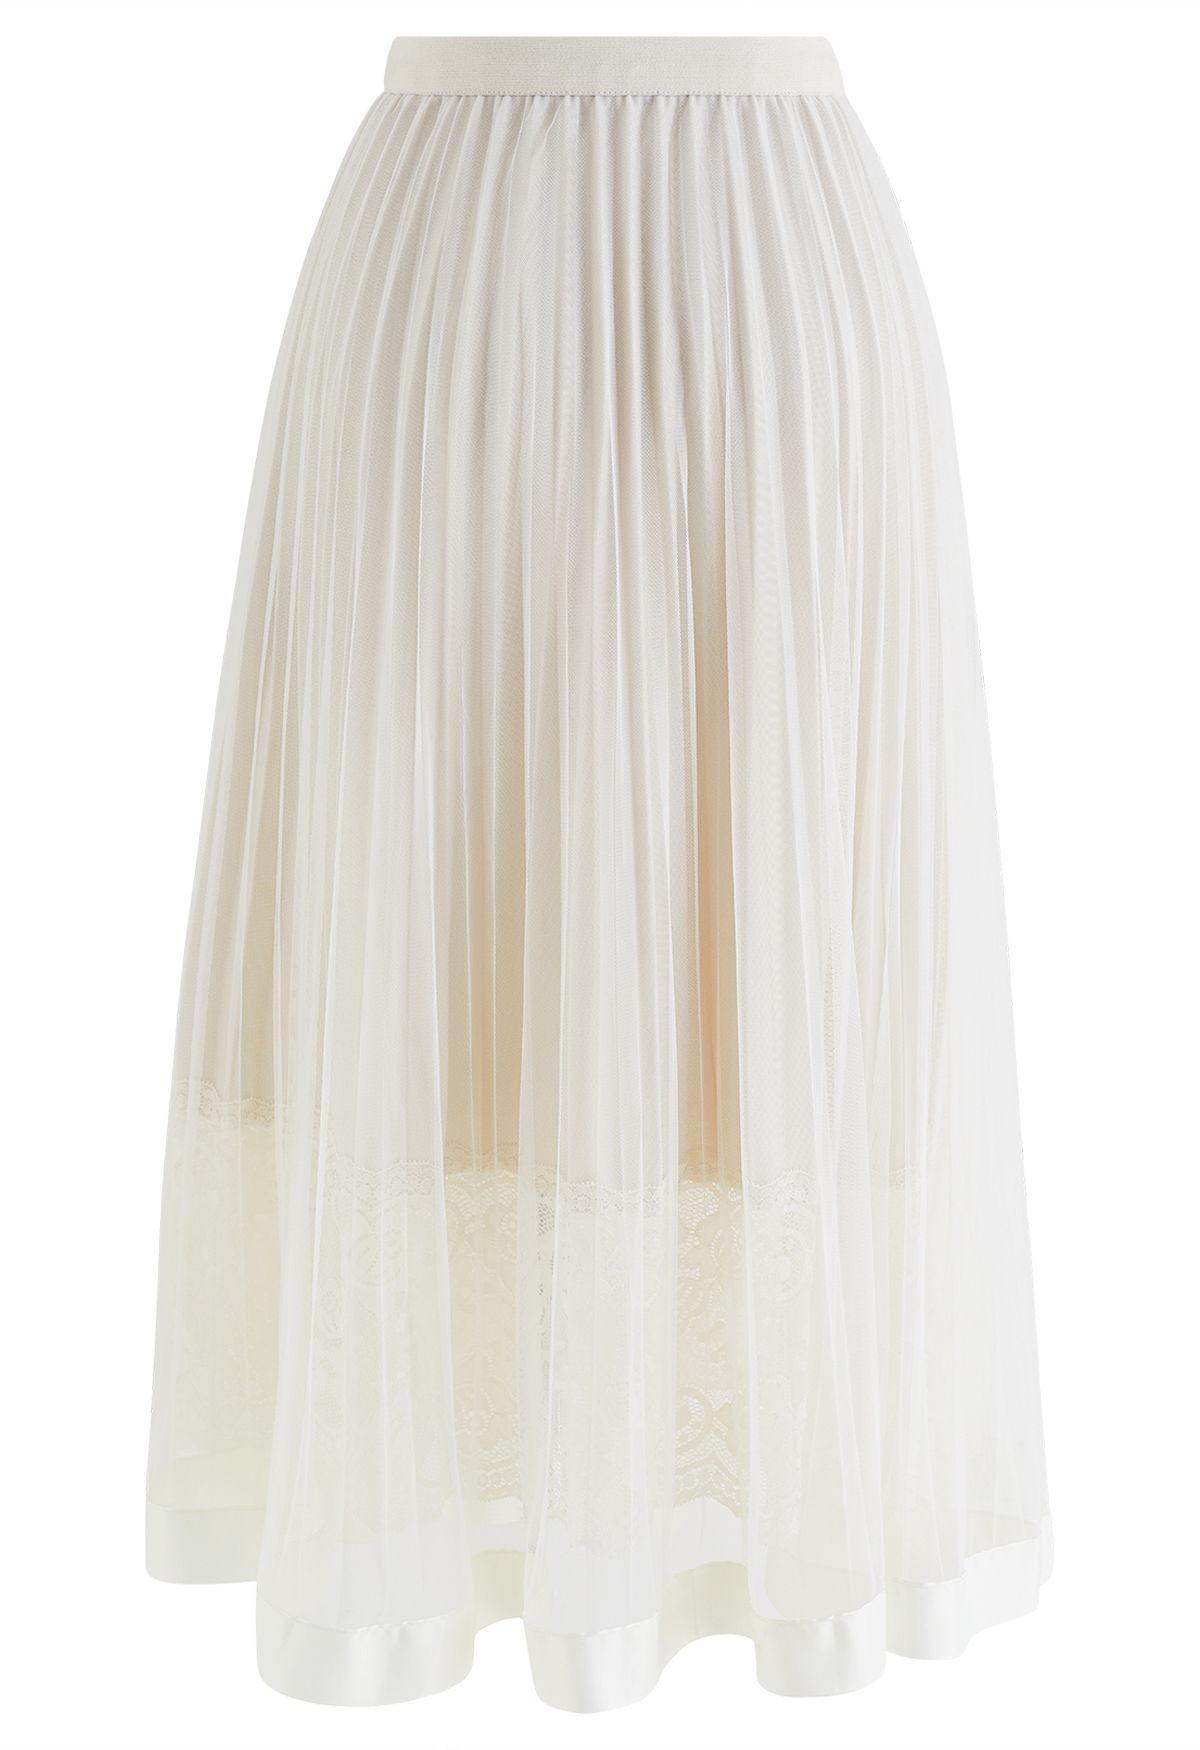 Lace Hem Double-Layered Mesh Midi Skirt in Cream - Retro, Indie and ...